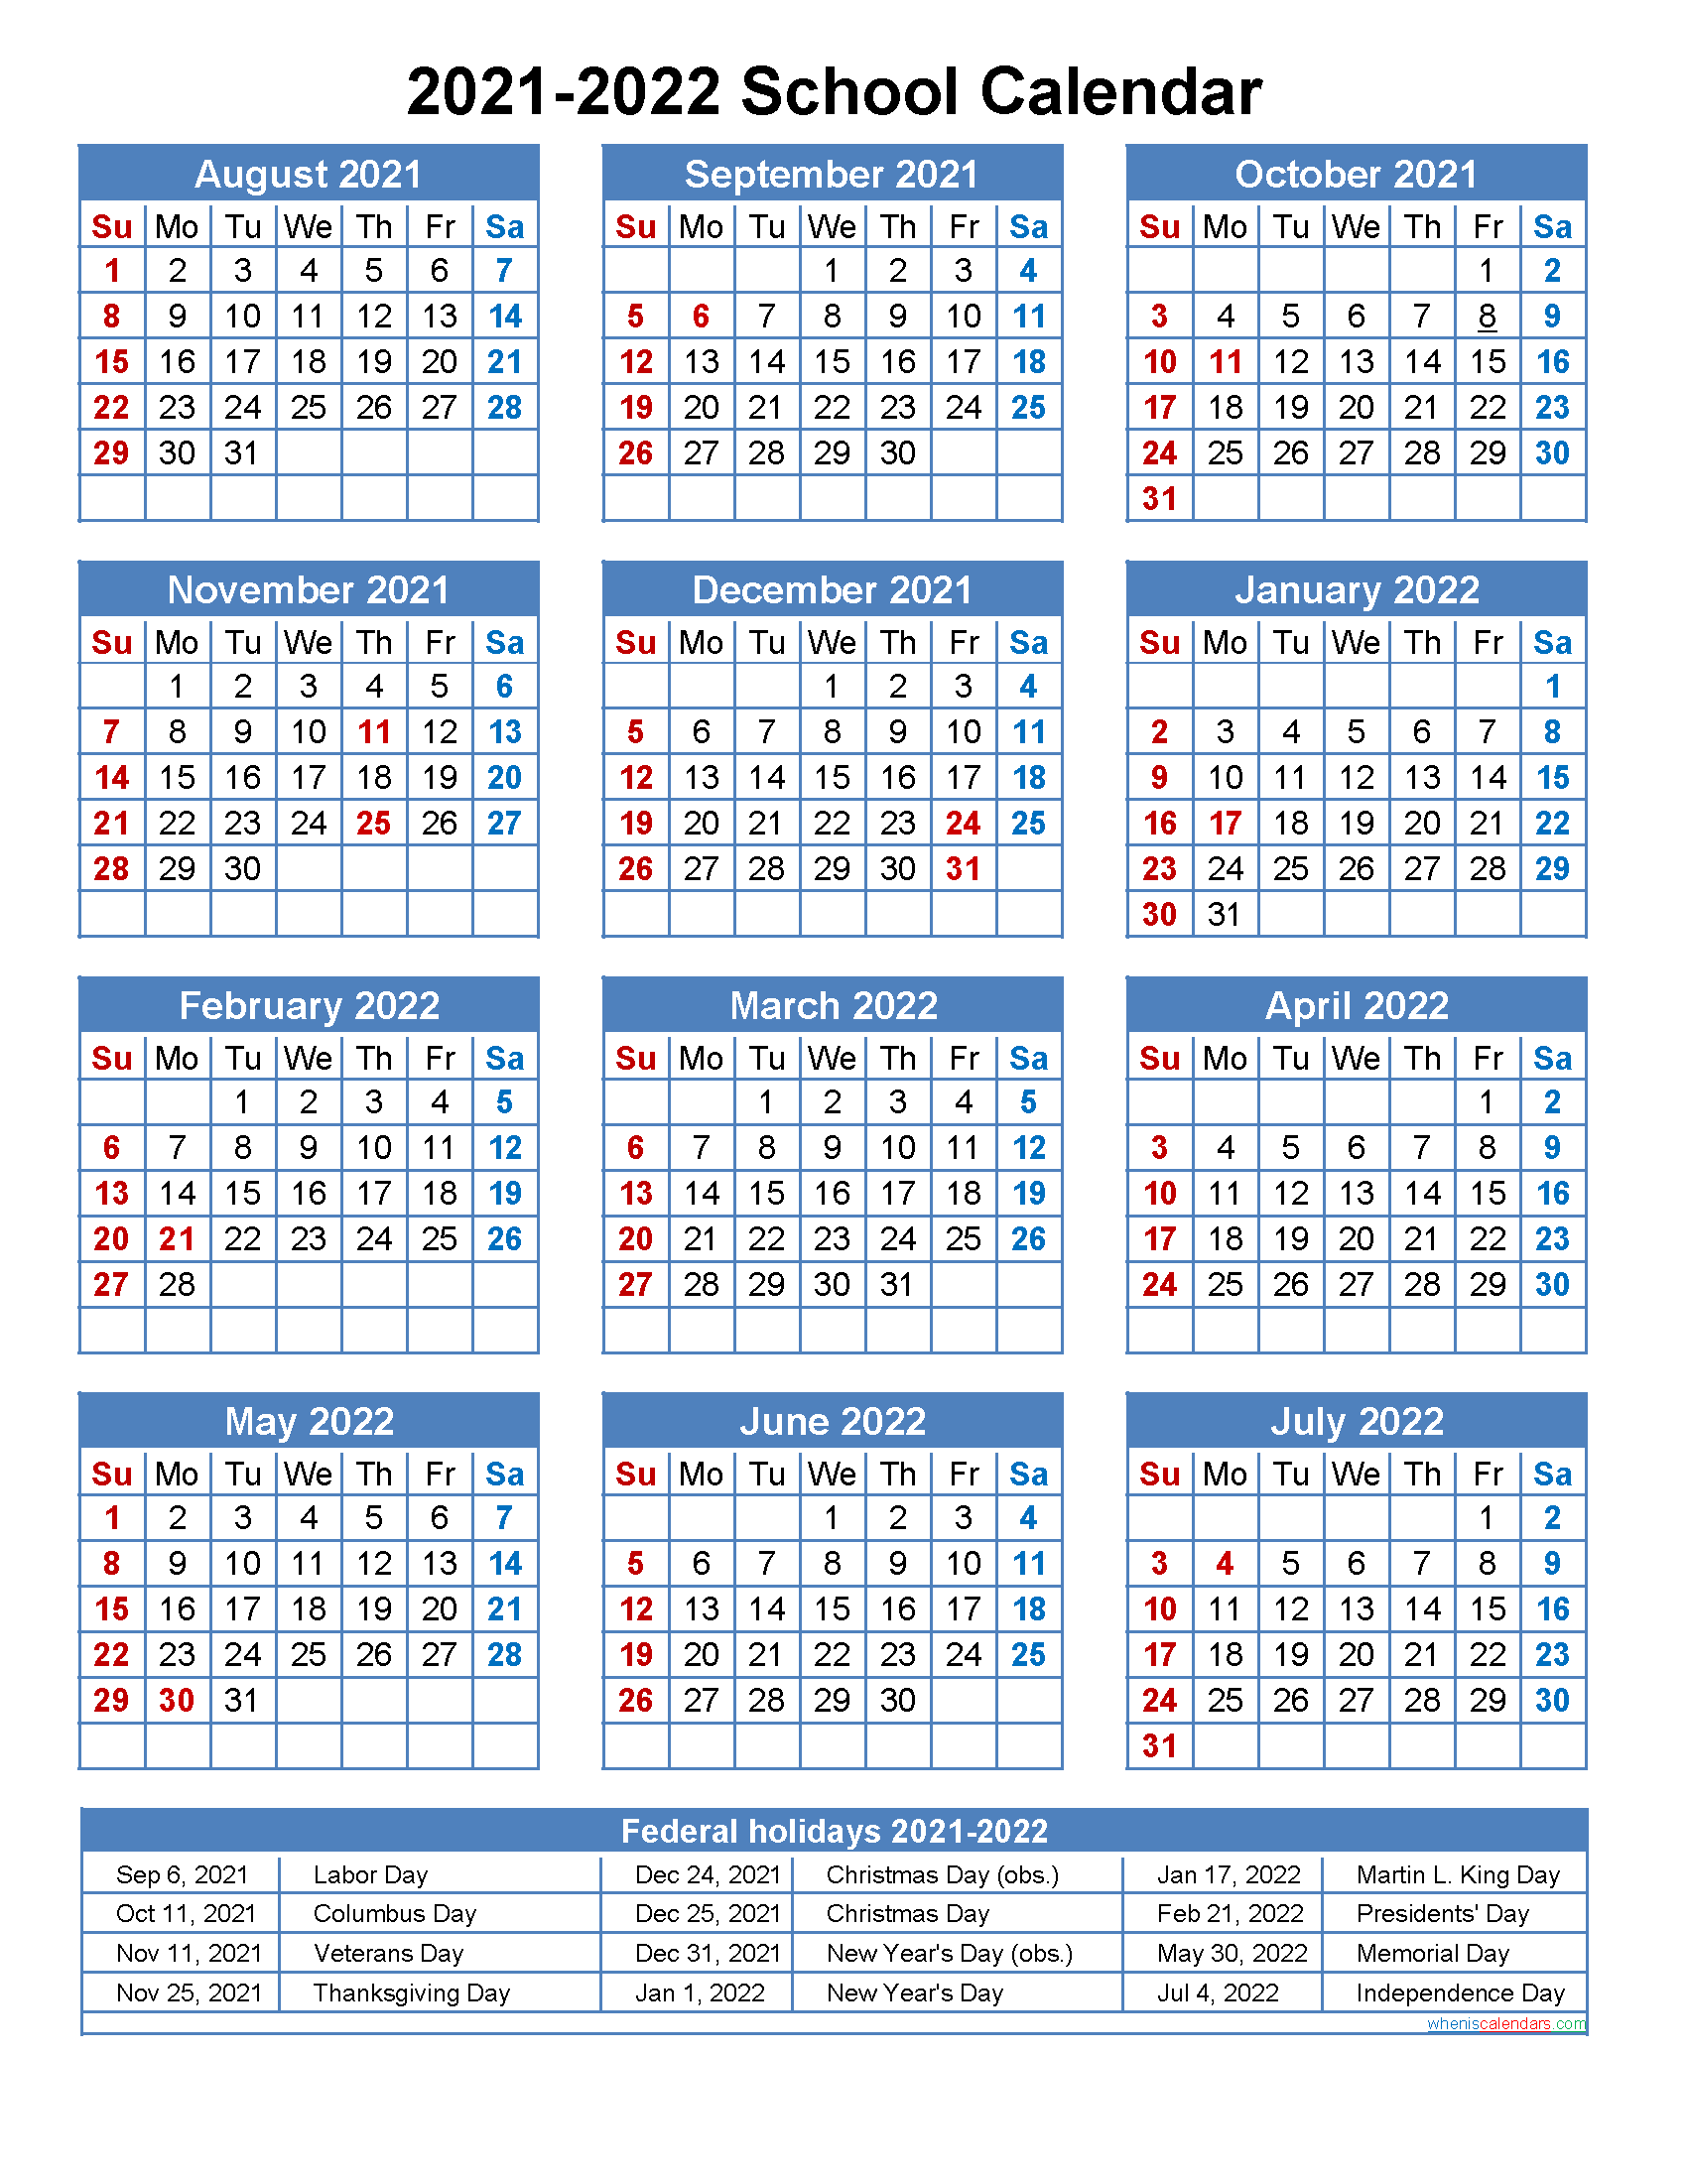 Free School Calendar 2020 to 2021 PDF and Image